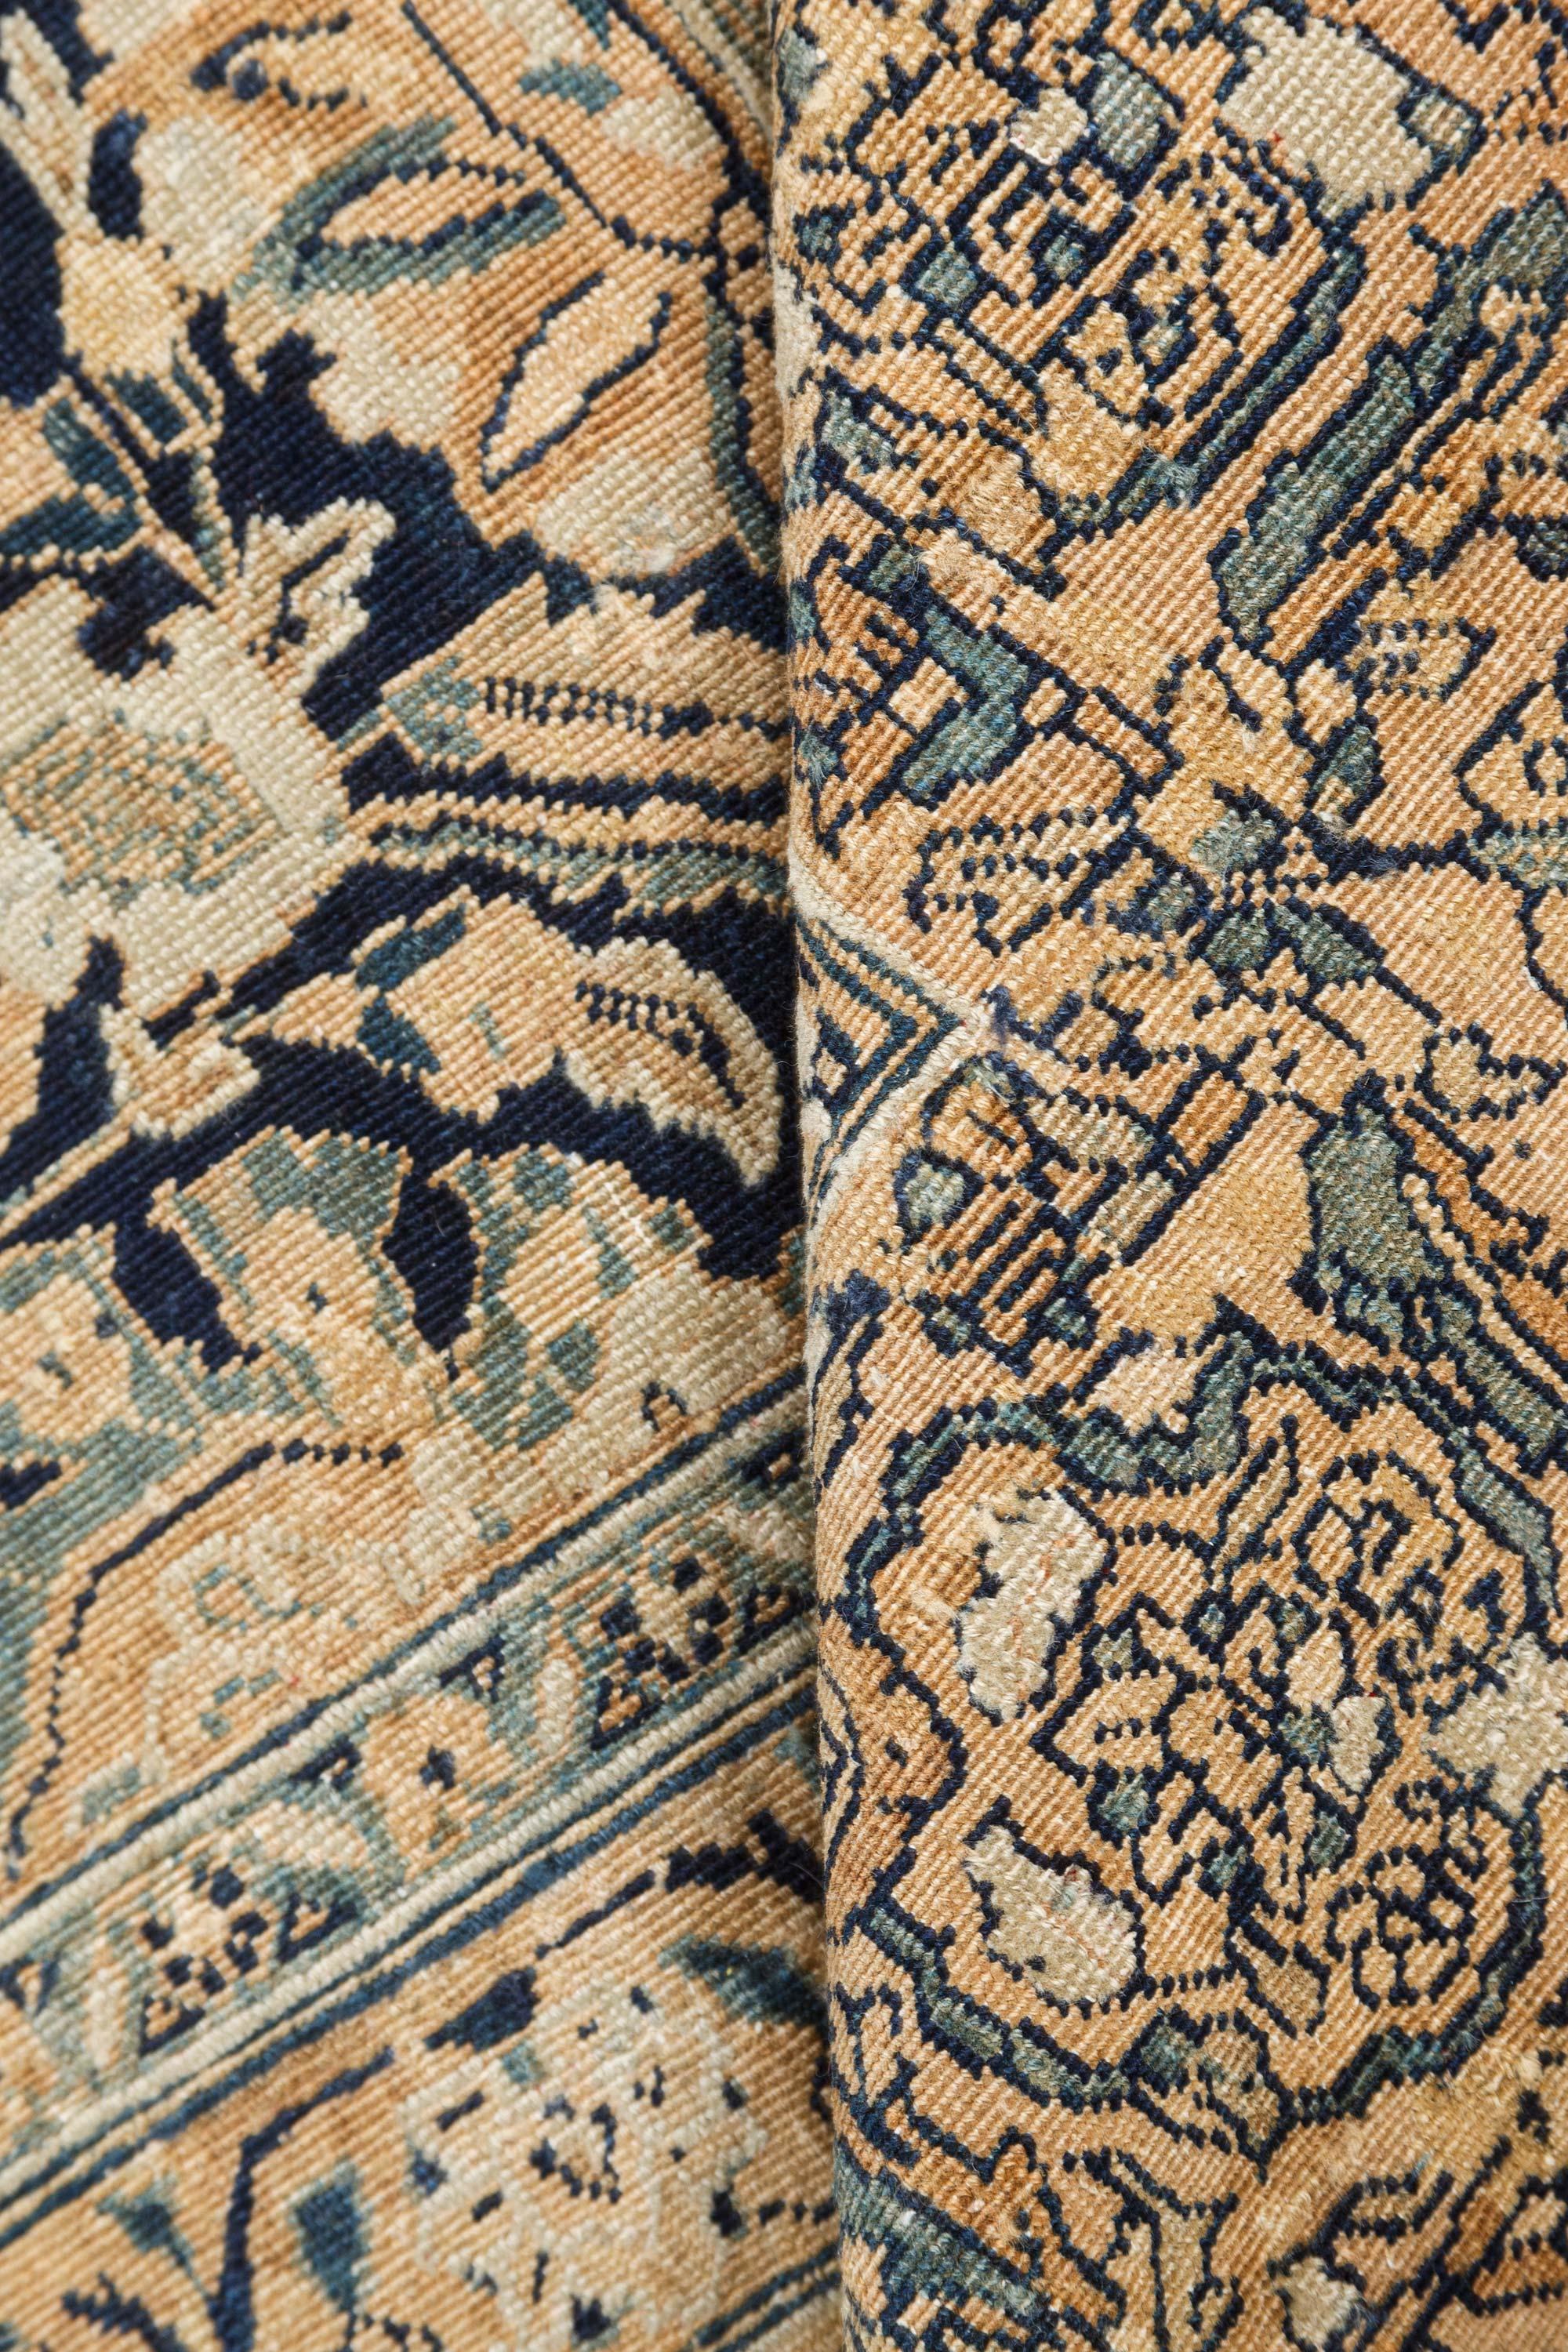 Antique Persian Tabriz handmade wool rug
Size: 11'0